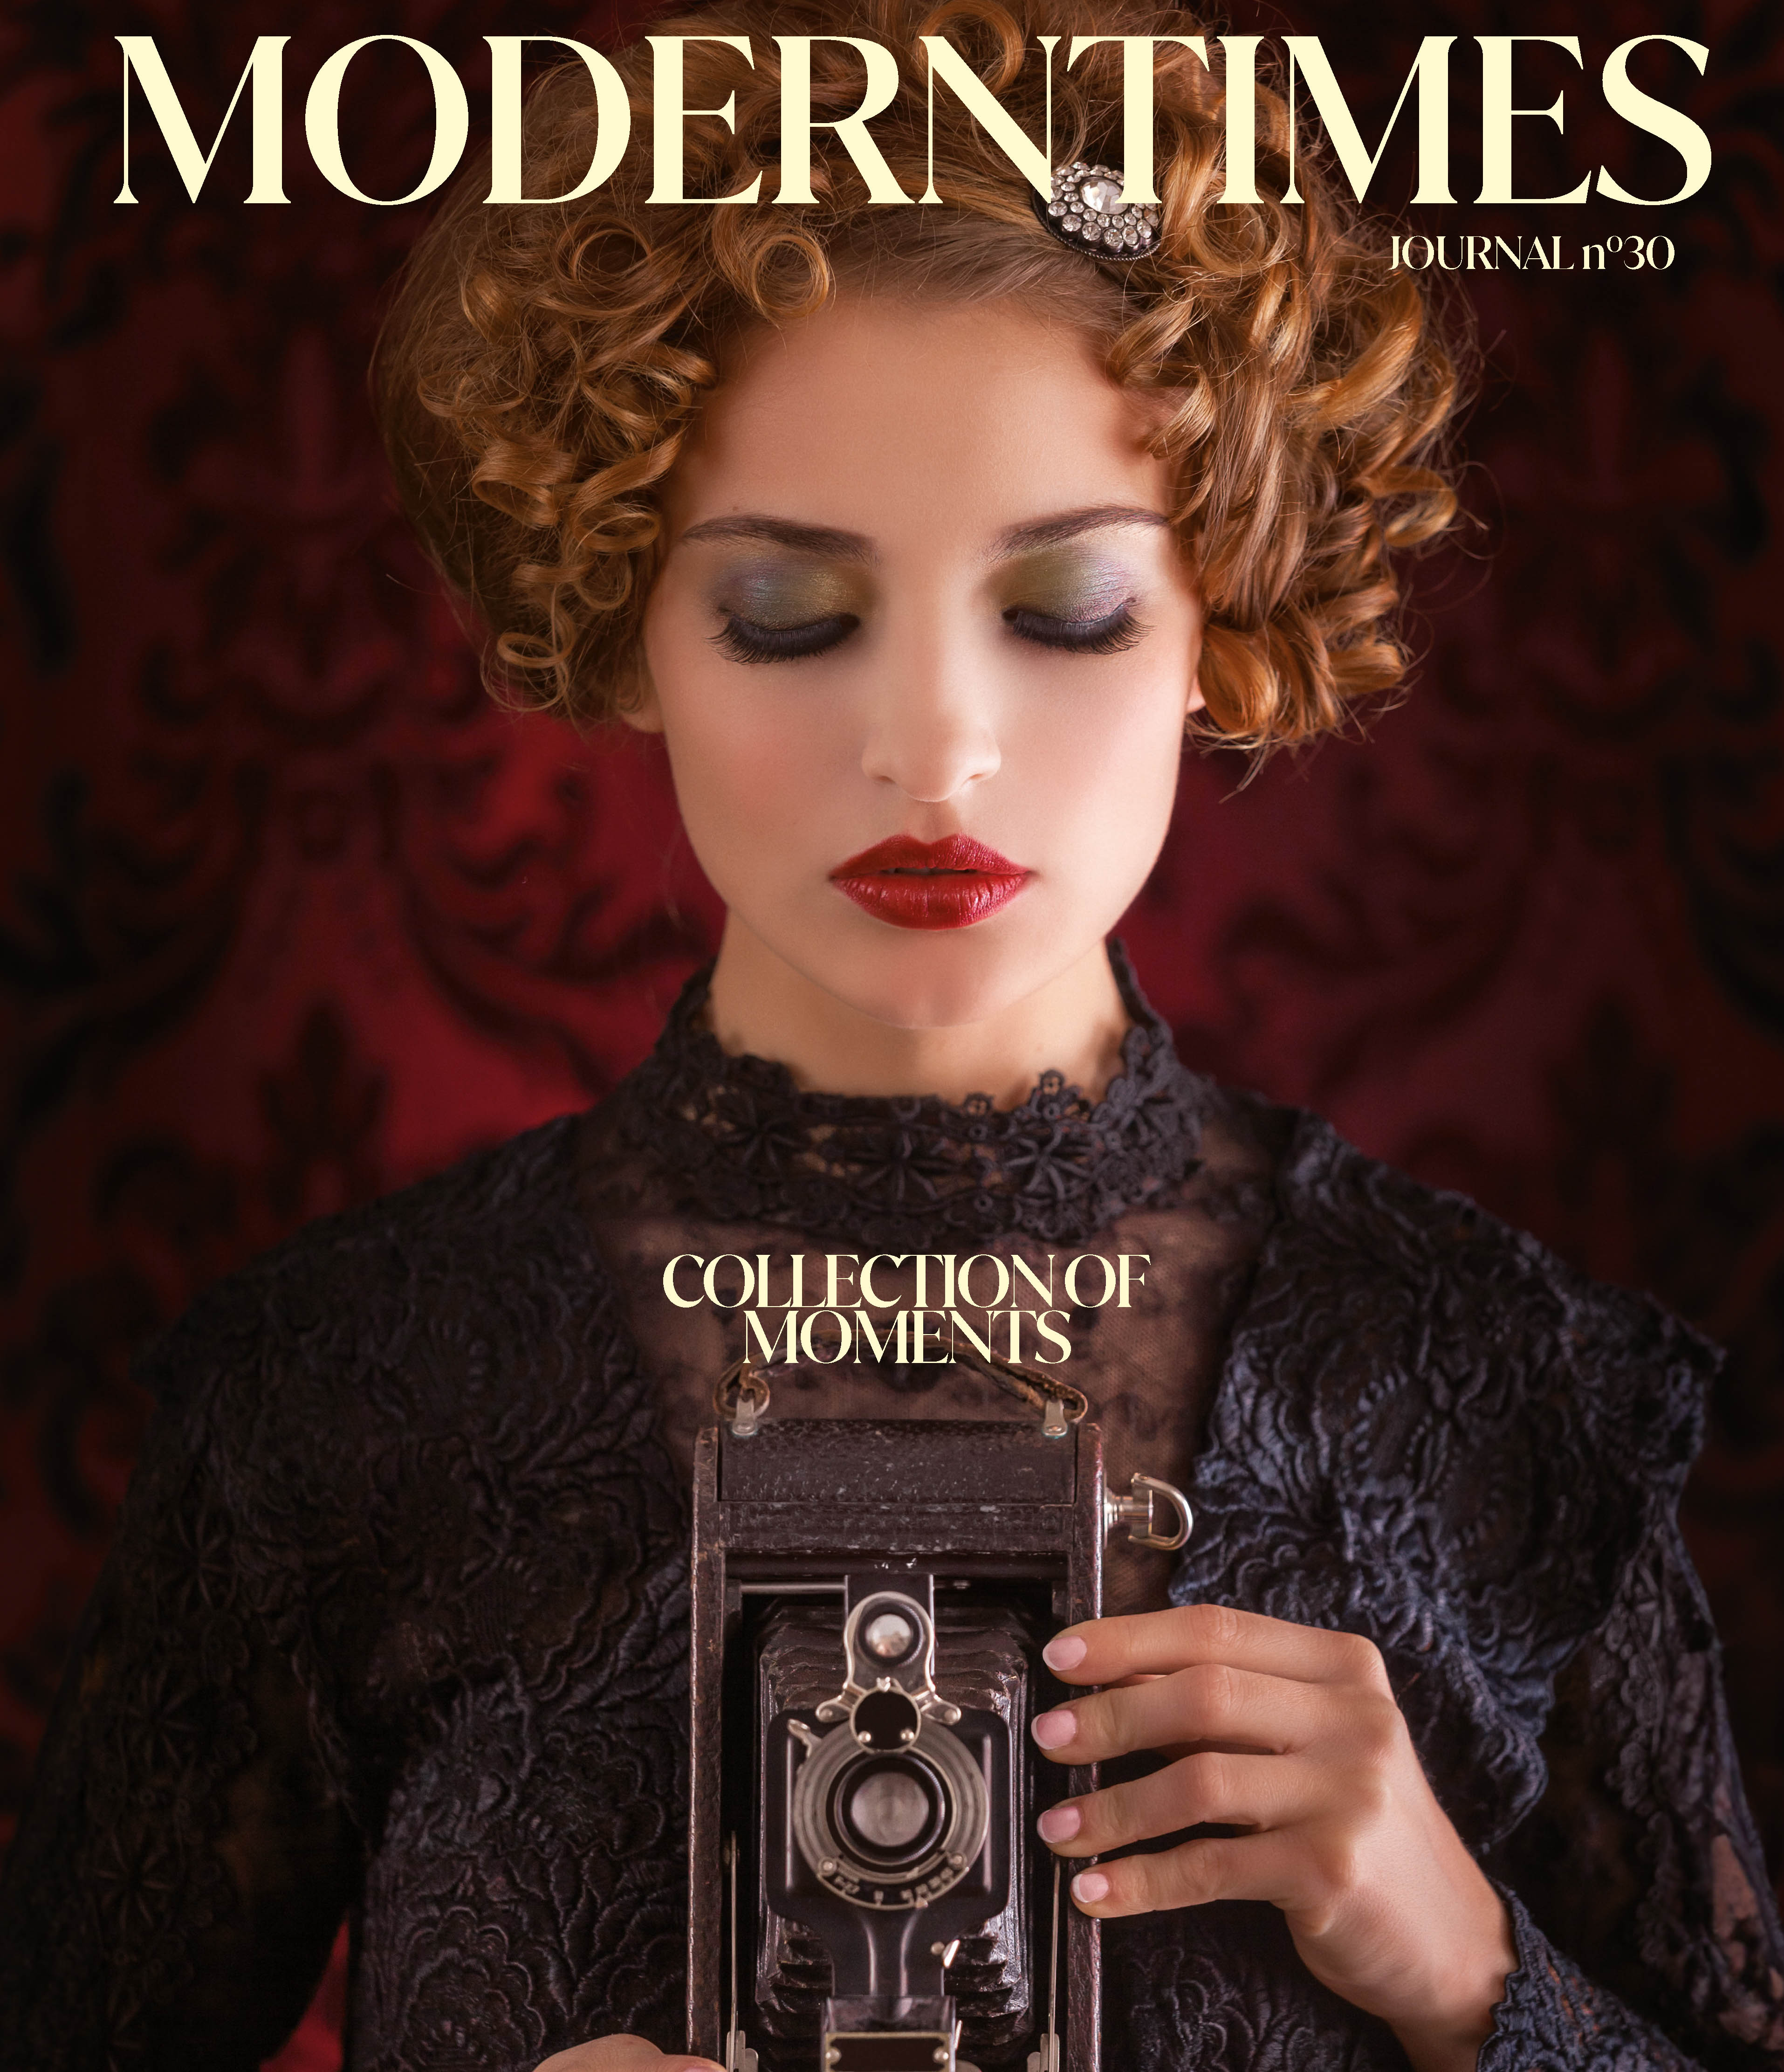 The Modern Times Journal N°30